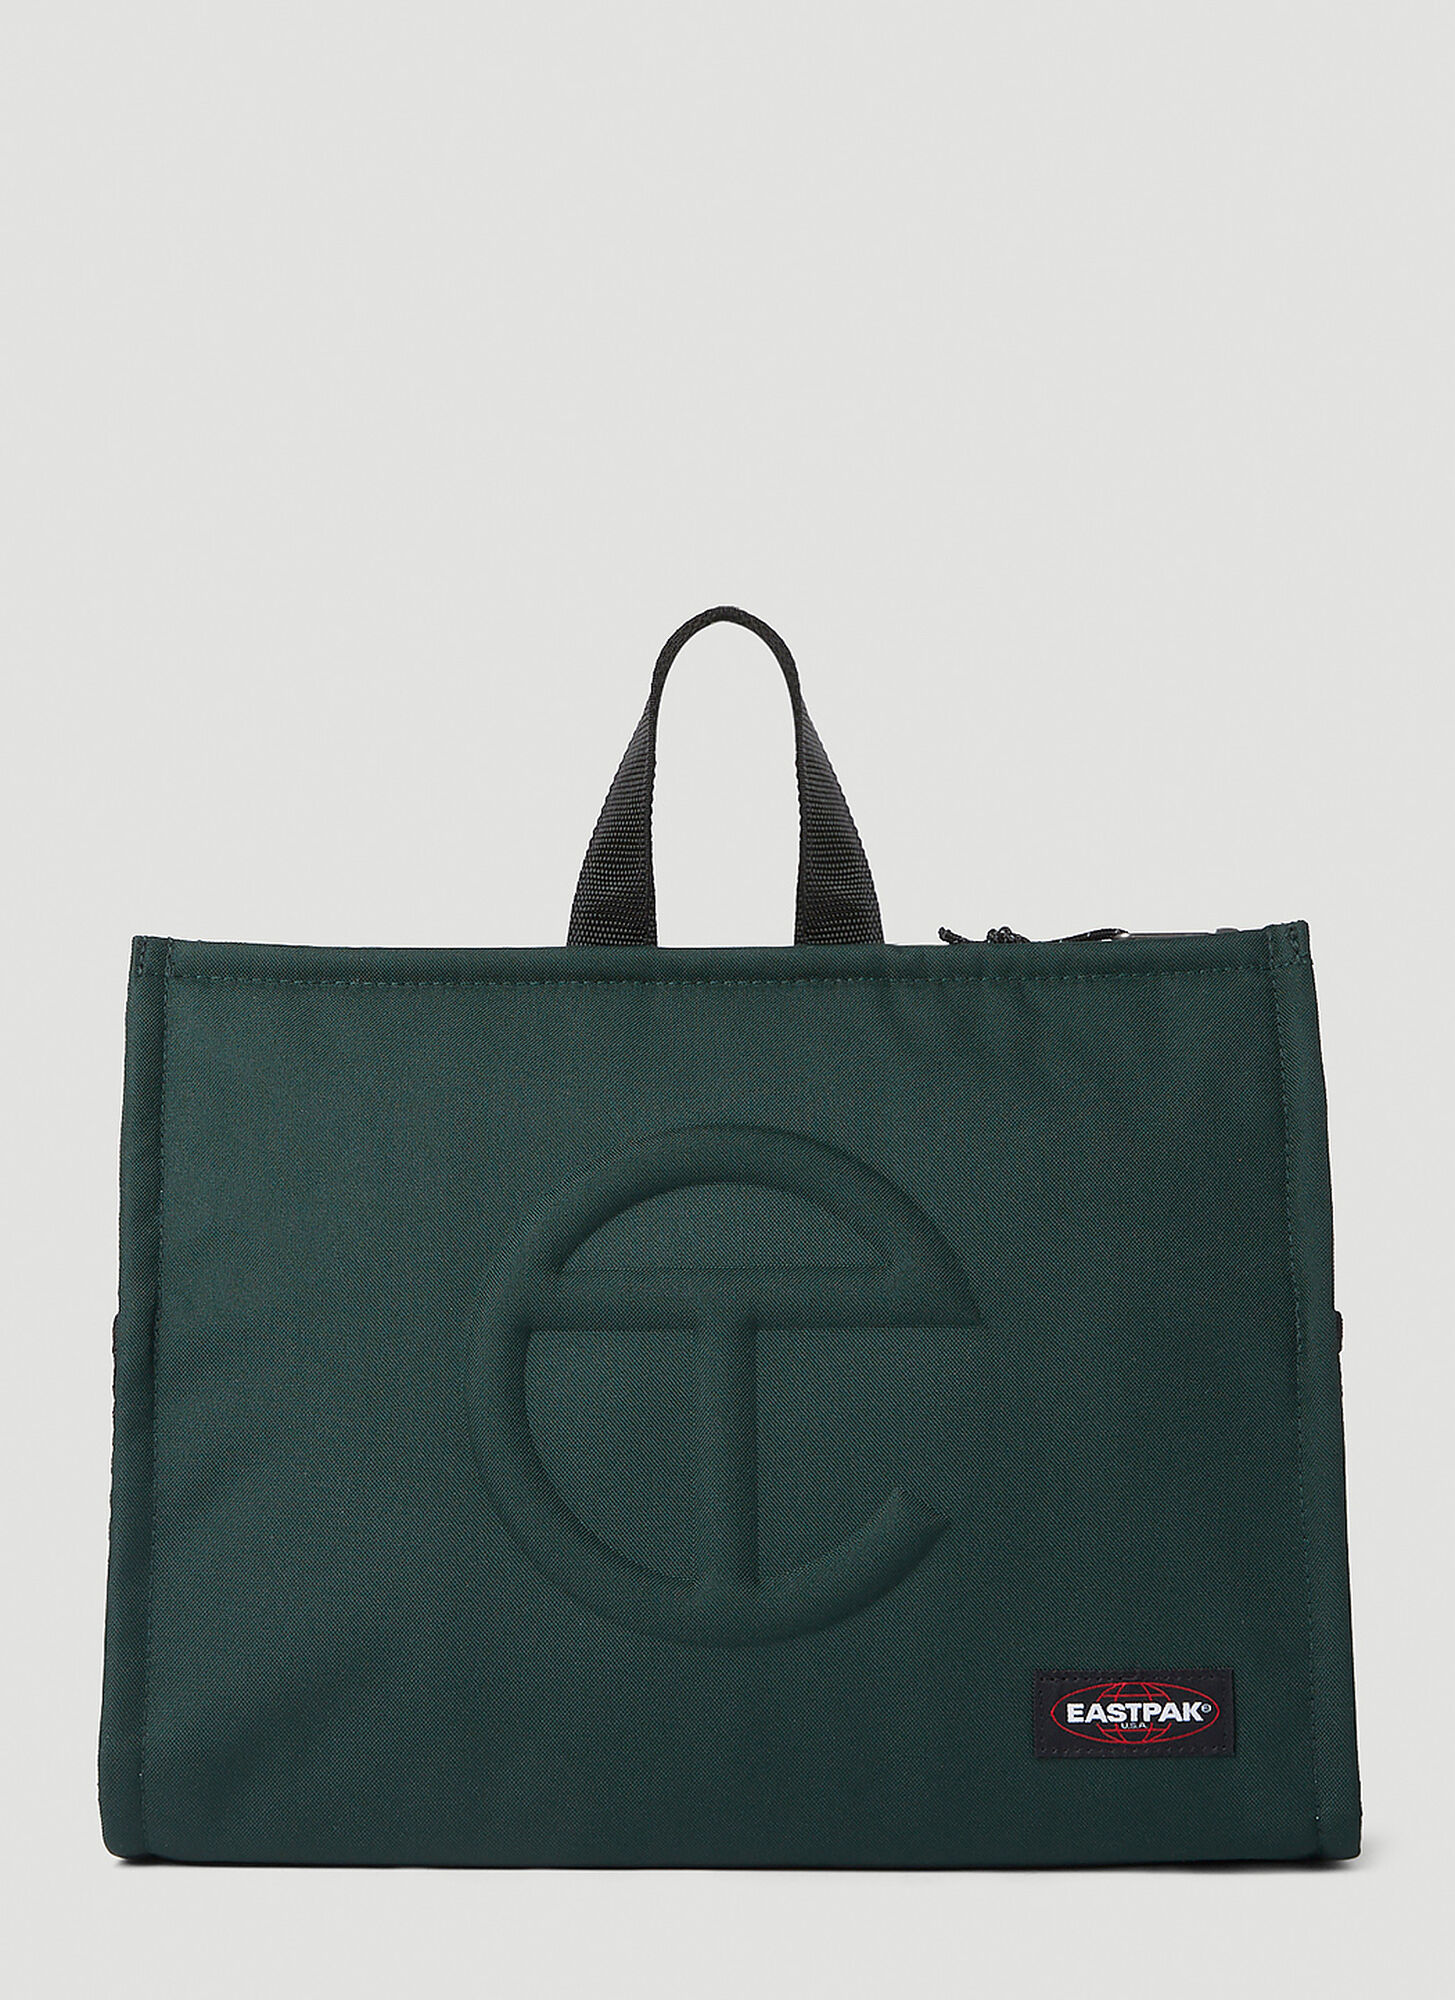 Eastpak X Telfar Shopper Convertible Medium Tote Bag In Green